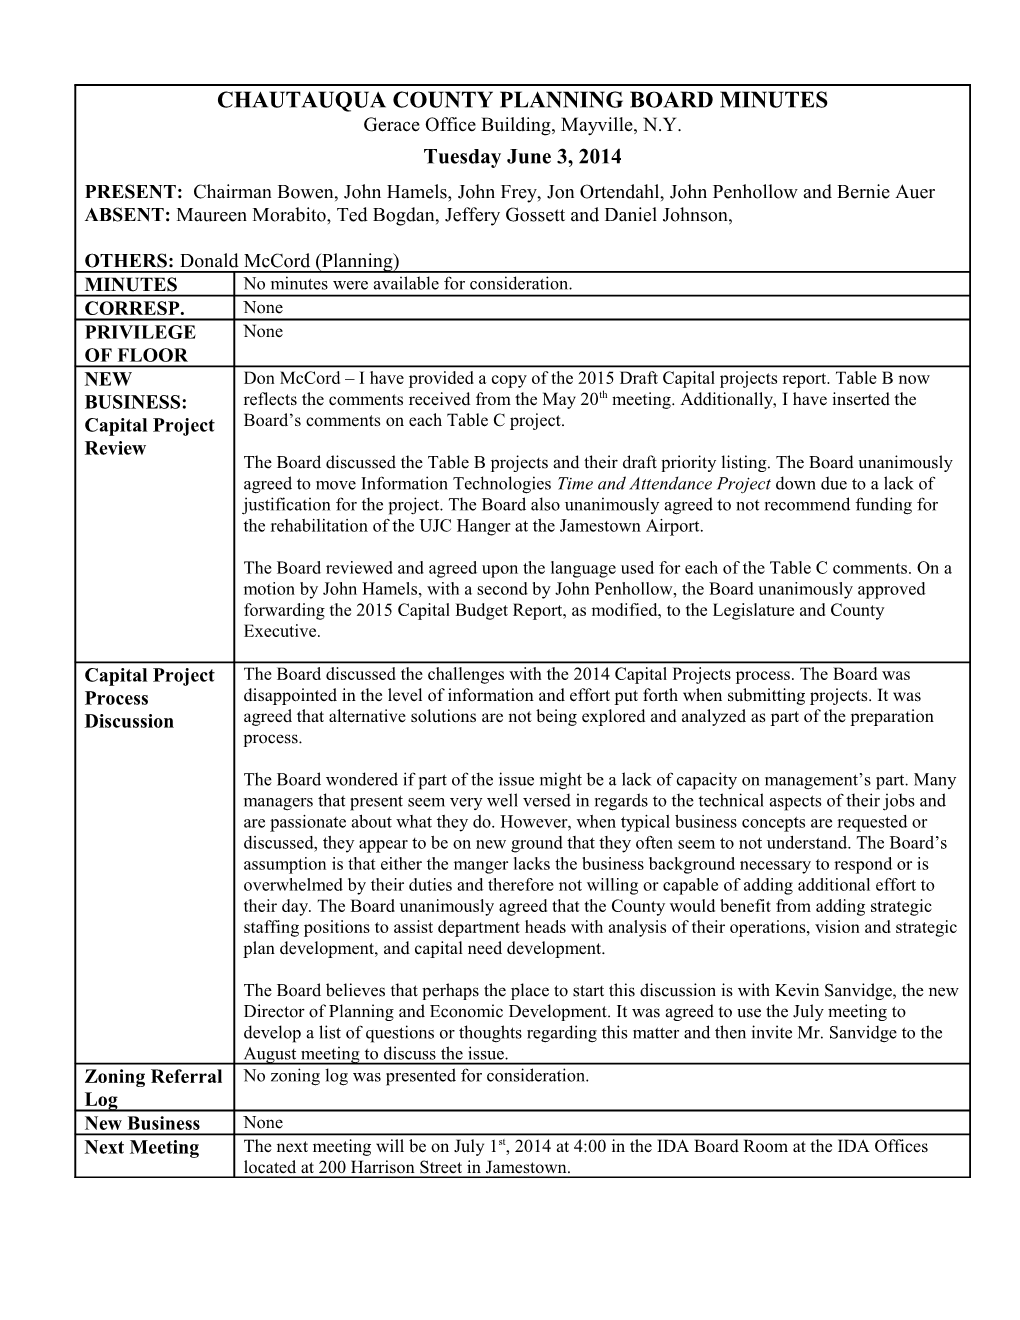 Chautauqua County Planning Board Minutes